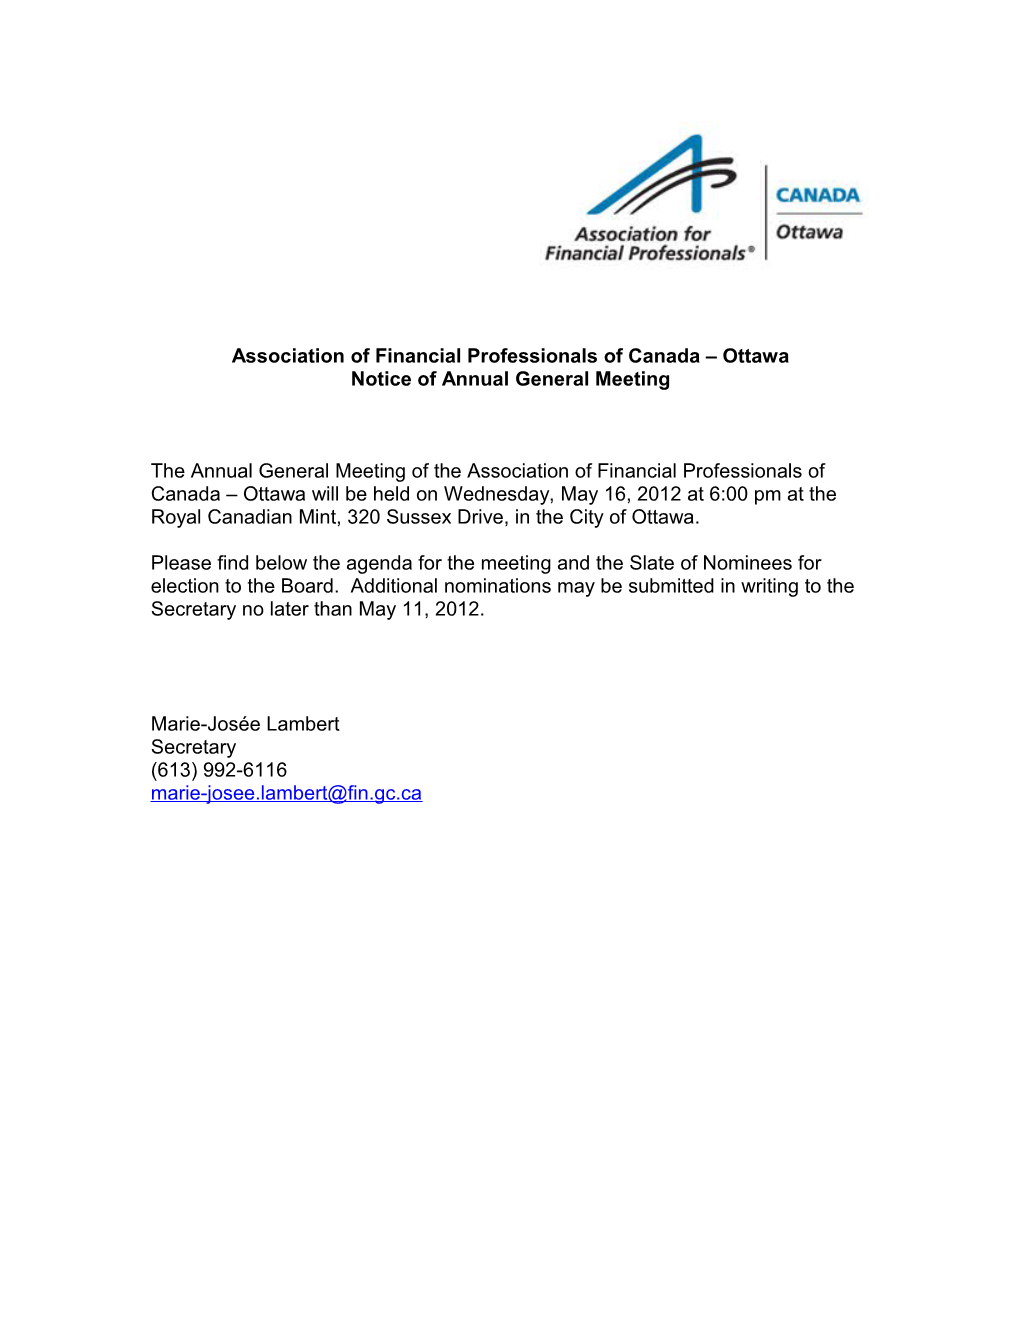 Association of Financial Professionals of Canada Ottawa